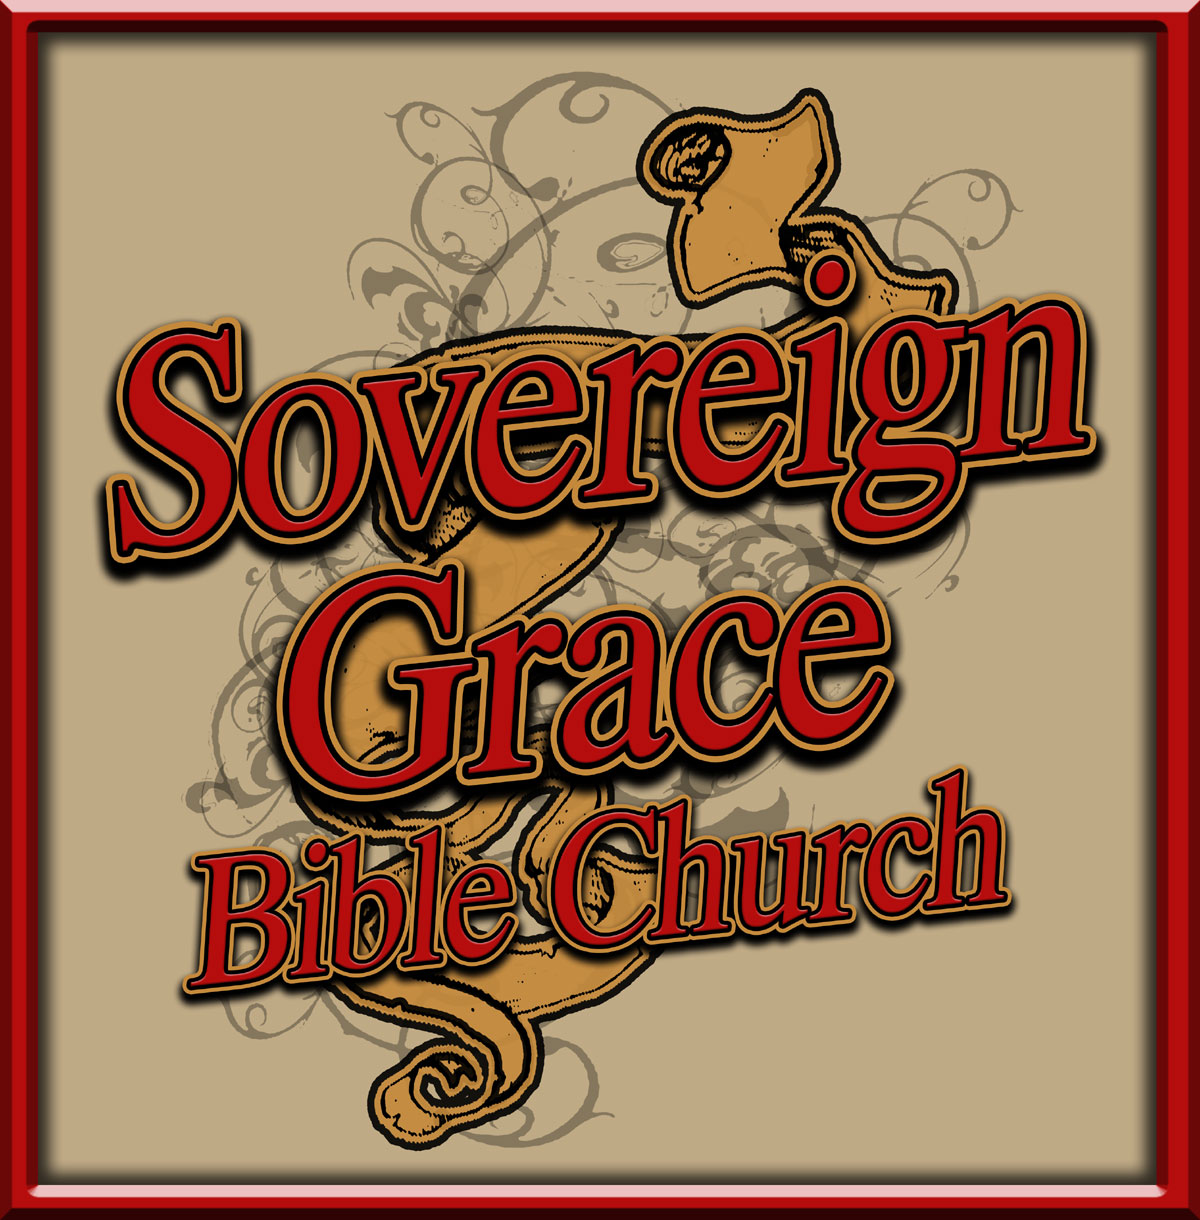 Sovereign Grace Bible Church of Ada, OK